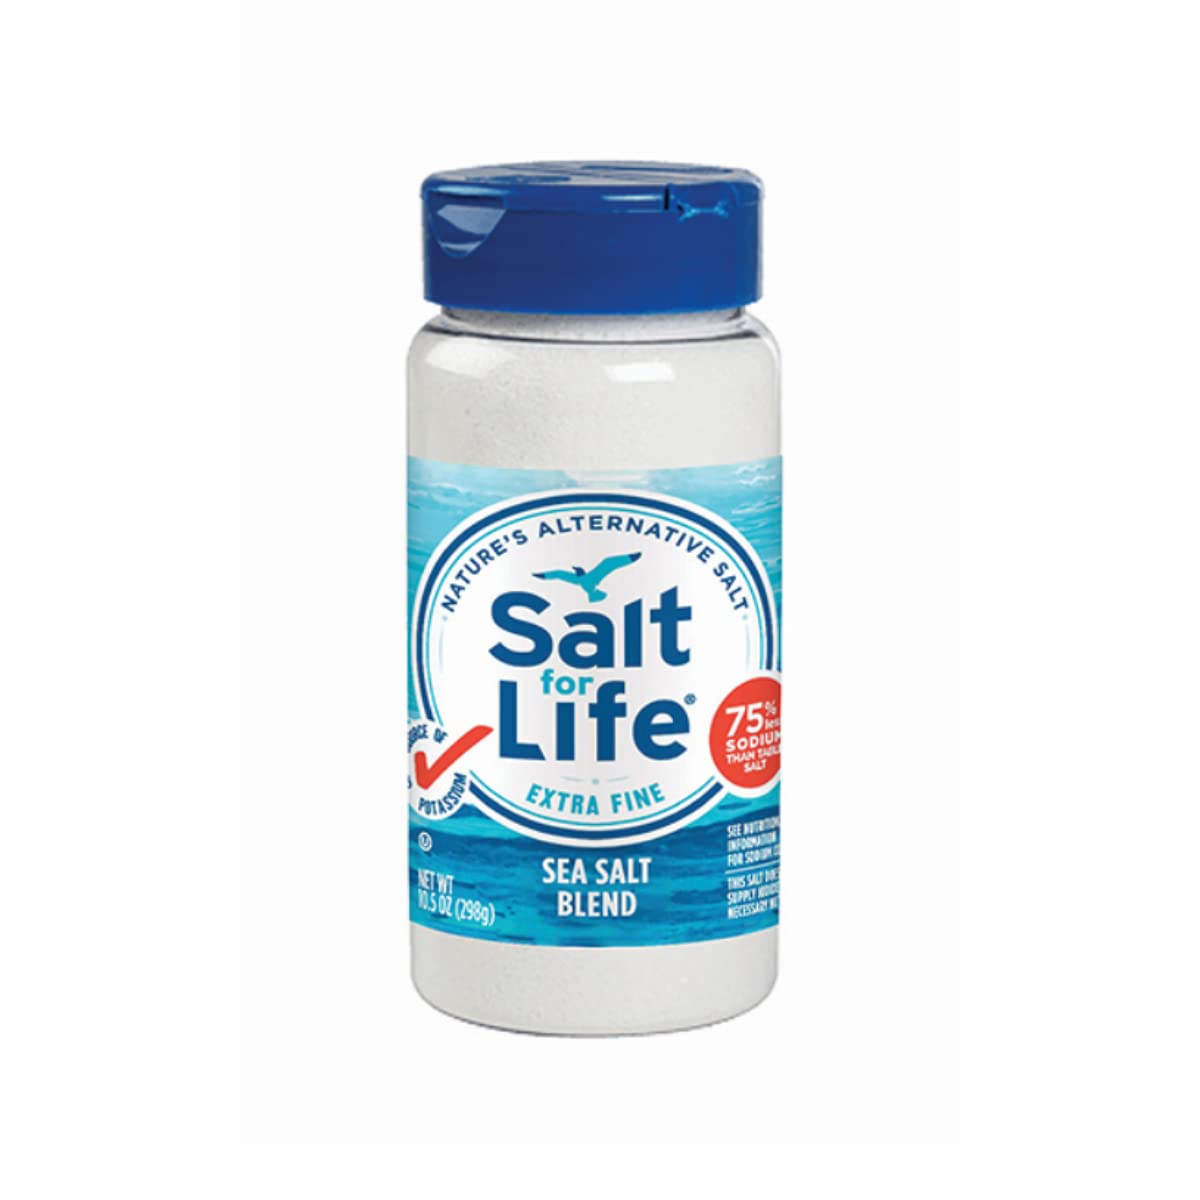 Salt For Life Salt Substitute - 10.5 oz. - Tasty Low Sodium Salt &  Potassium Salt Substitute for High Blood Pressure - The Top Salt Substitute  With Real Salt-Taste and Salt Alternative!